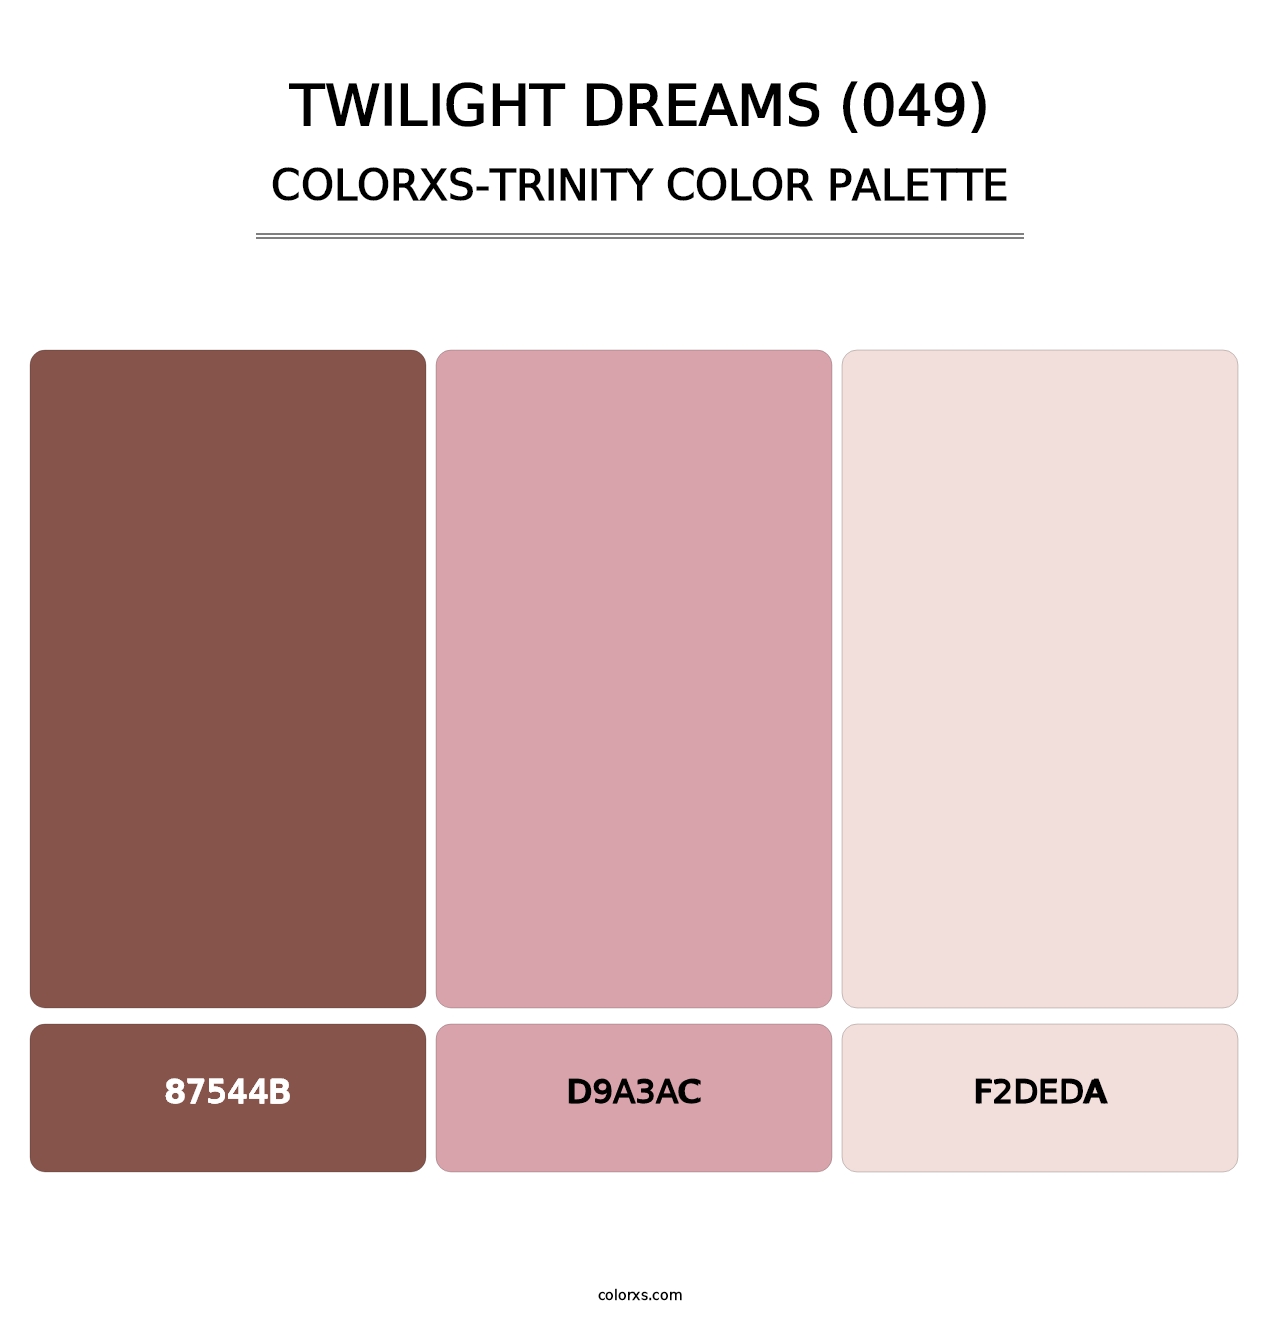 Twilight Dreams (049) - Colorxs Trinity Palette